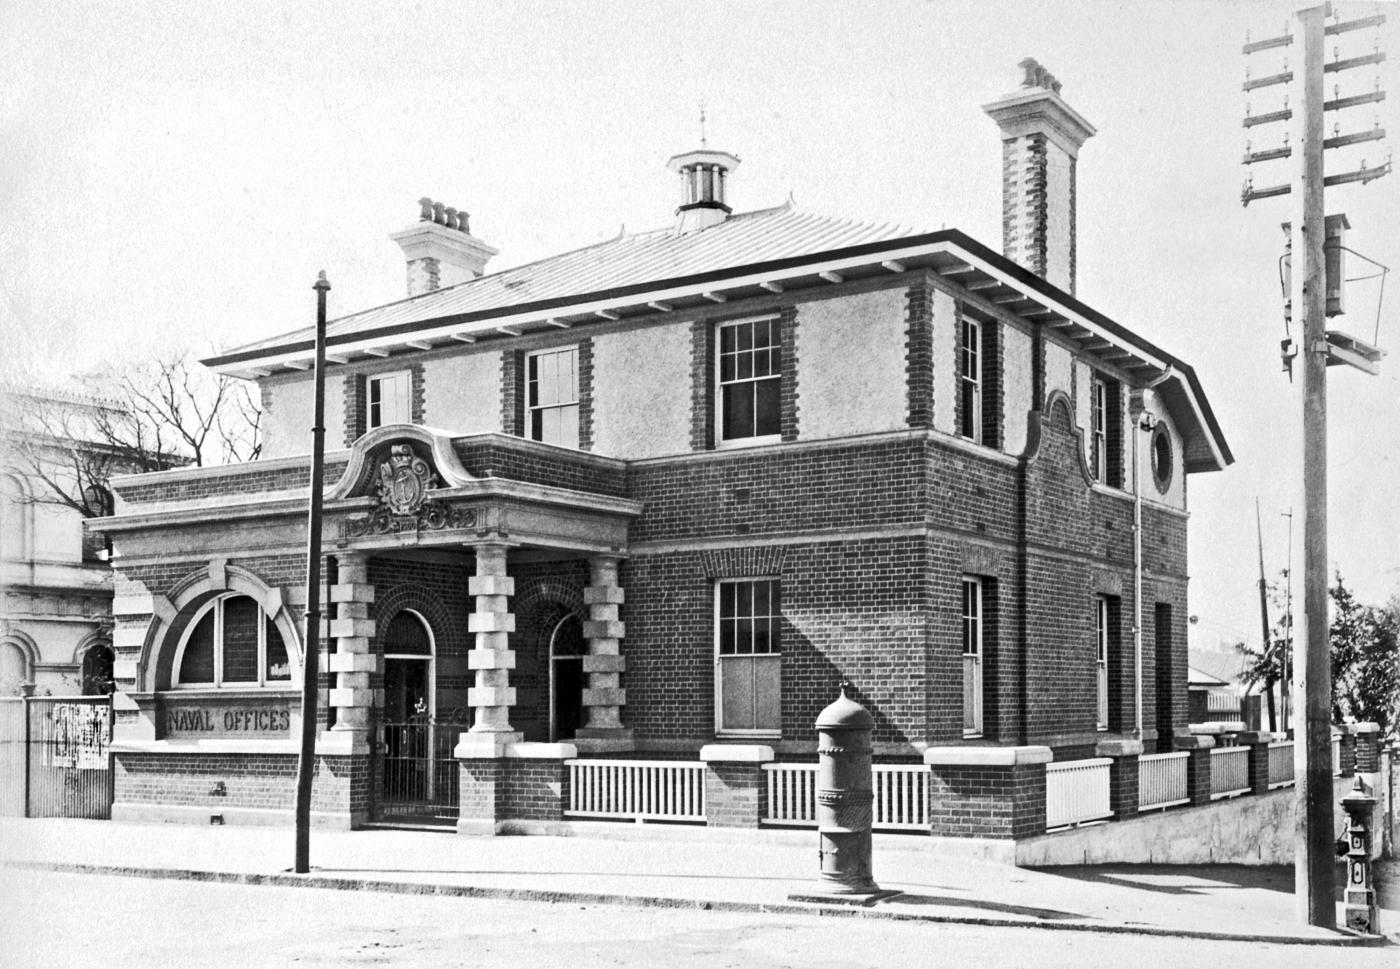 Former Naval Offices, Edward Street, Brisbane